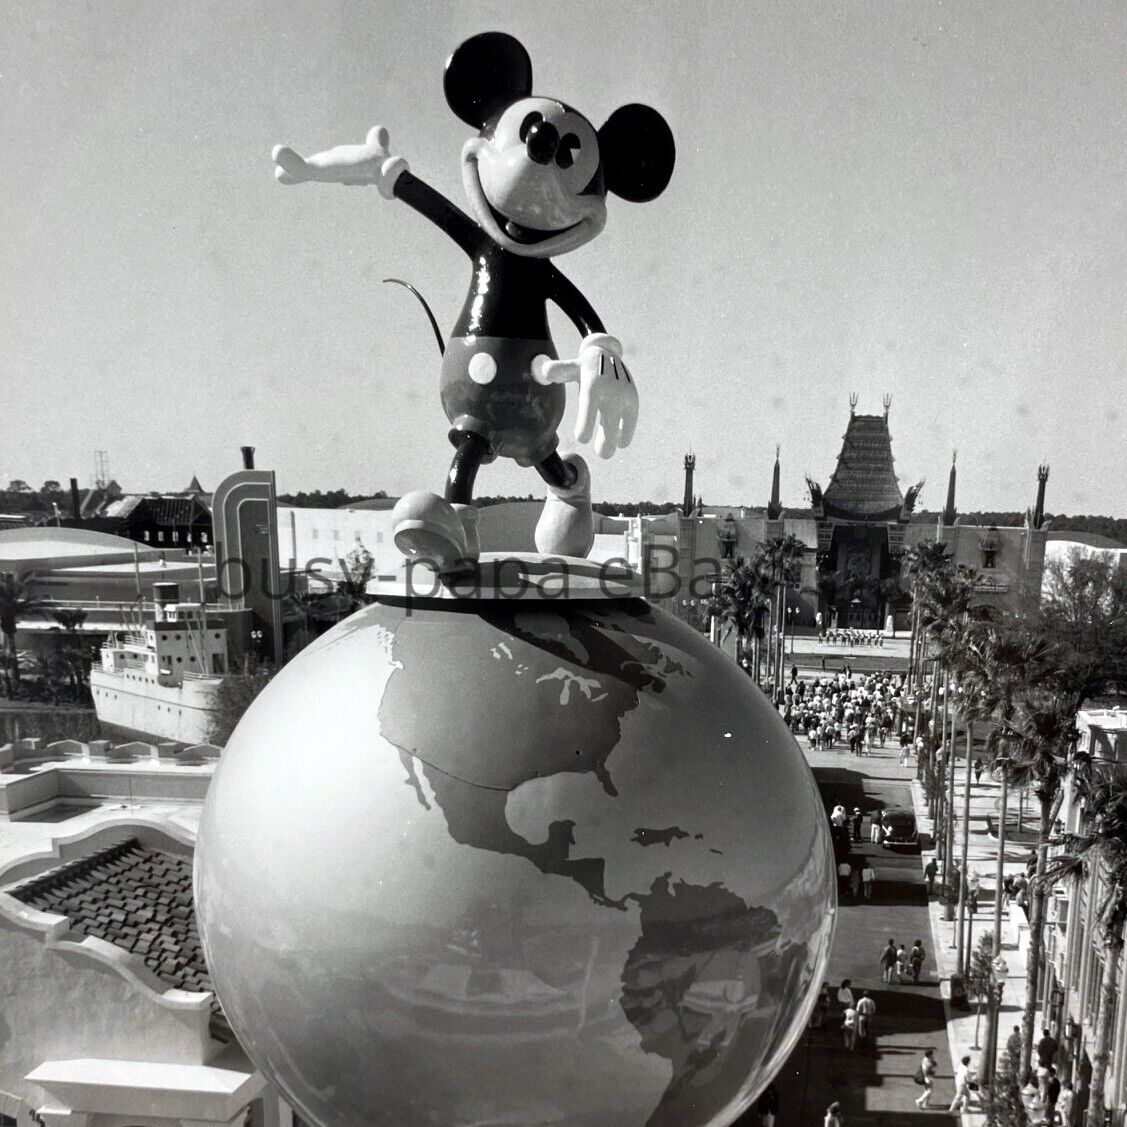 1989 Walt Disney MGM Studios Theme Park California Adventure Hollywood Blvd #1